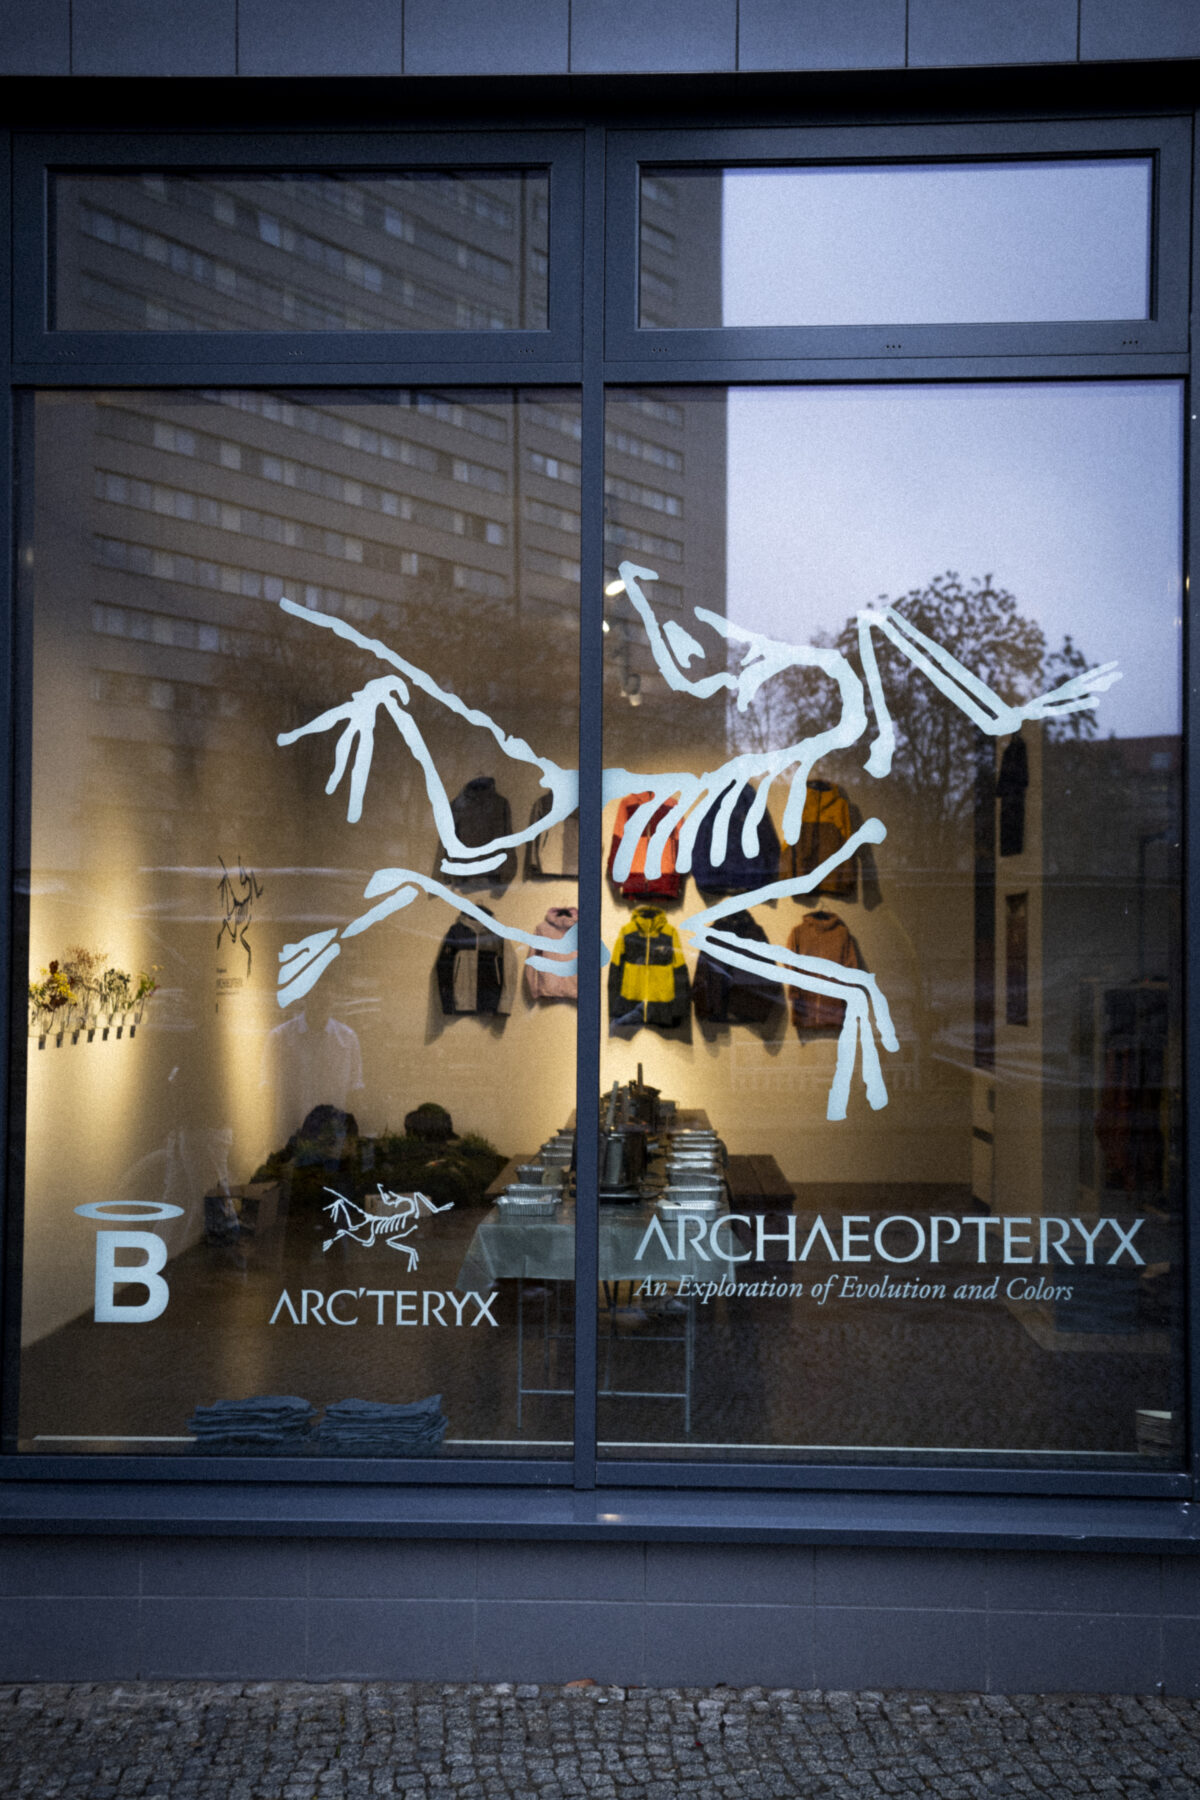 Arc'teryx workshop in Berlin with Beinghunted